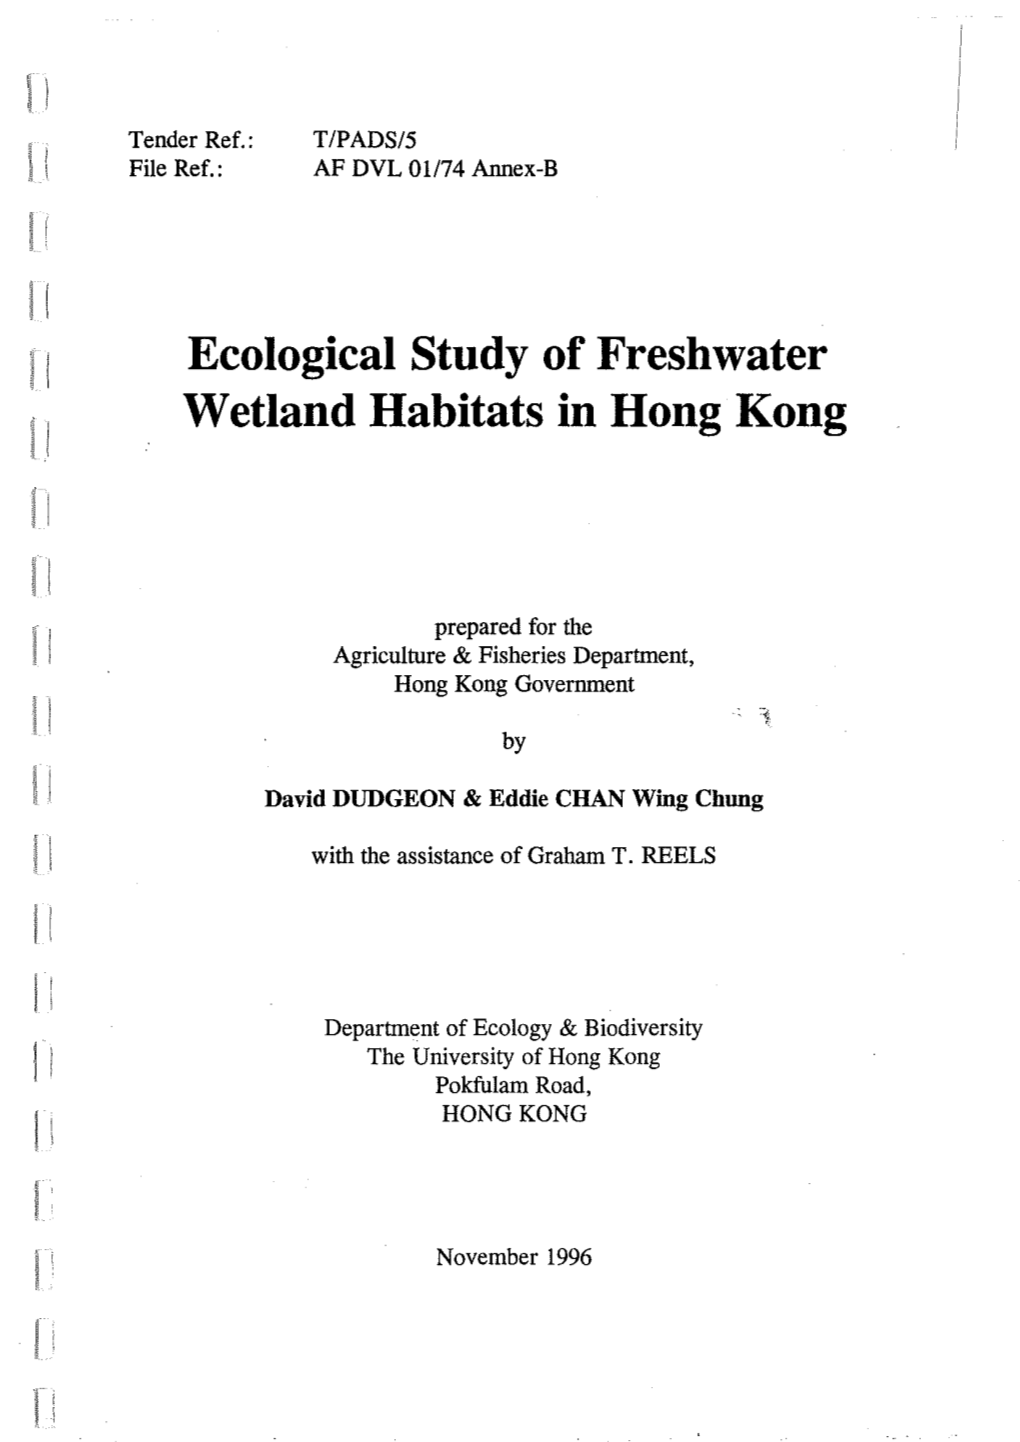 Ecological Study of Freshwater Wetland Habitats in Hong Kong